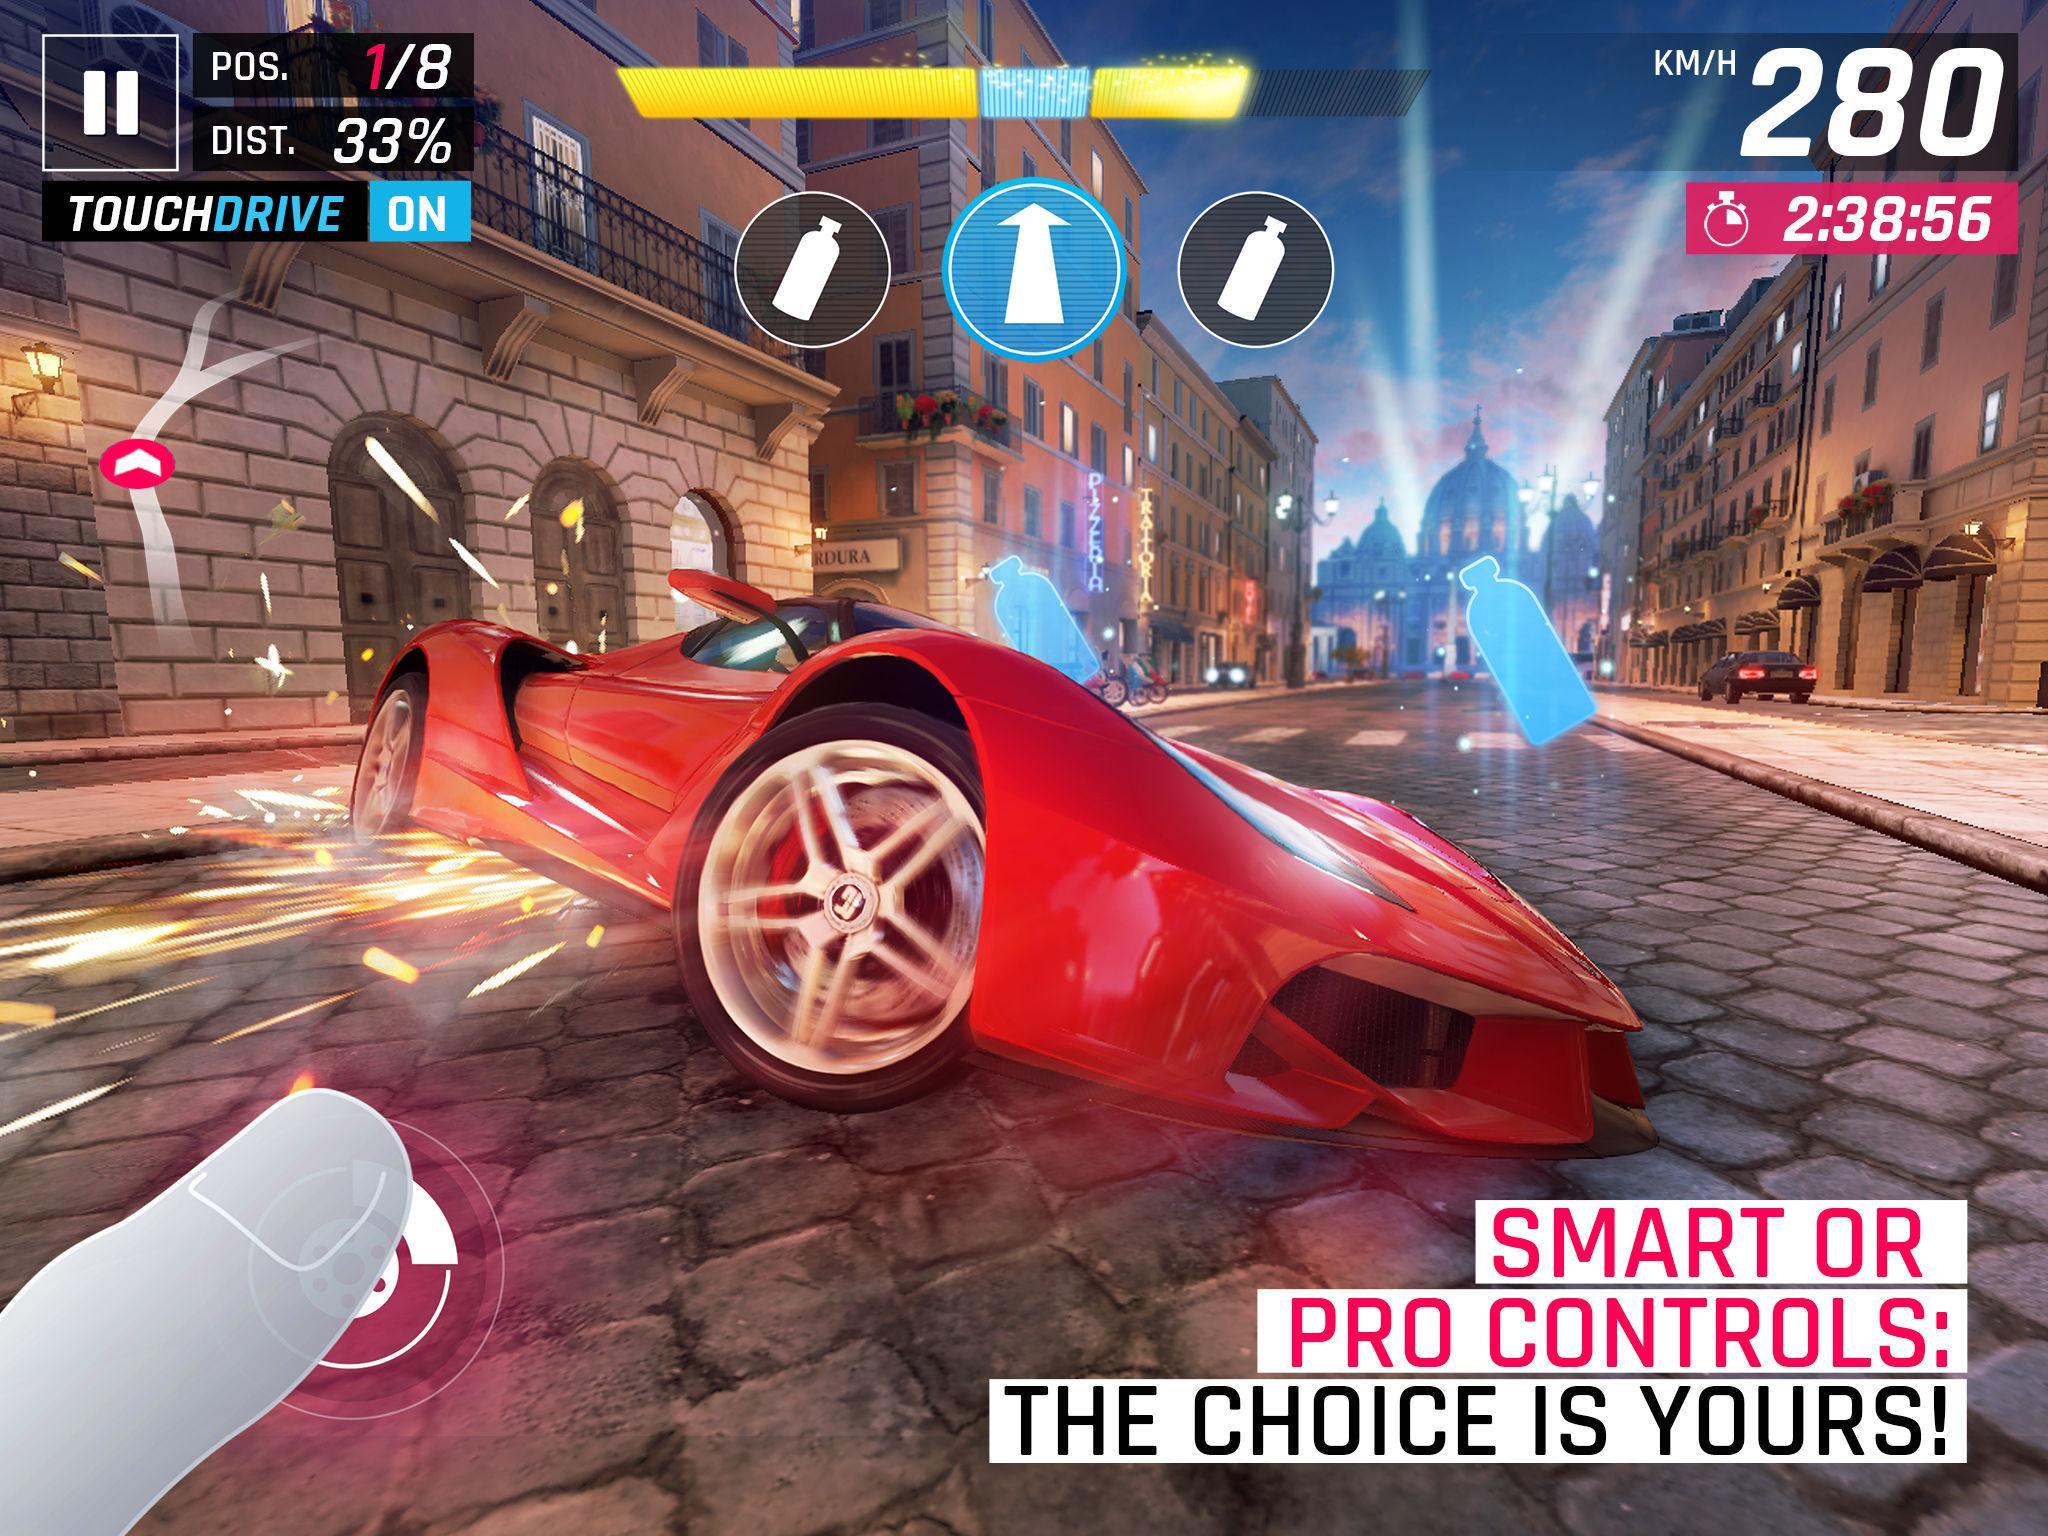 Asphalt 9 Legends - Epic Car Action Racing Game 2.5.3a Screenshot 12